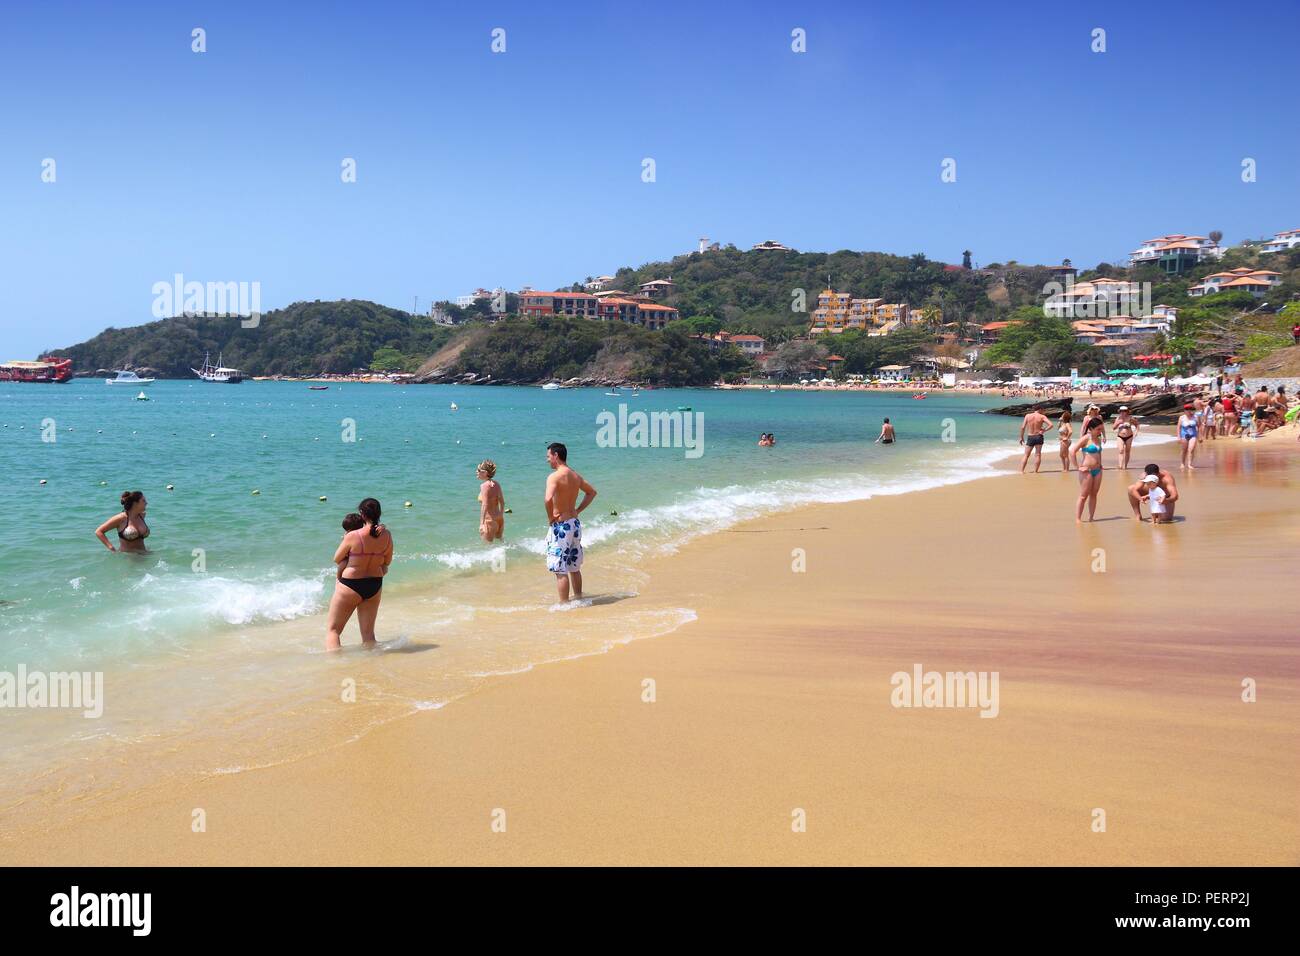 BUZIOS, BRAZIL - OCTOBER 16, 2014: People visit Joao Fernando beach in Buzios, state of Rio de Janeiro in Brazil. Brazil had 5.17 million visitors in  Stock Photo